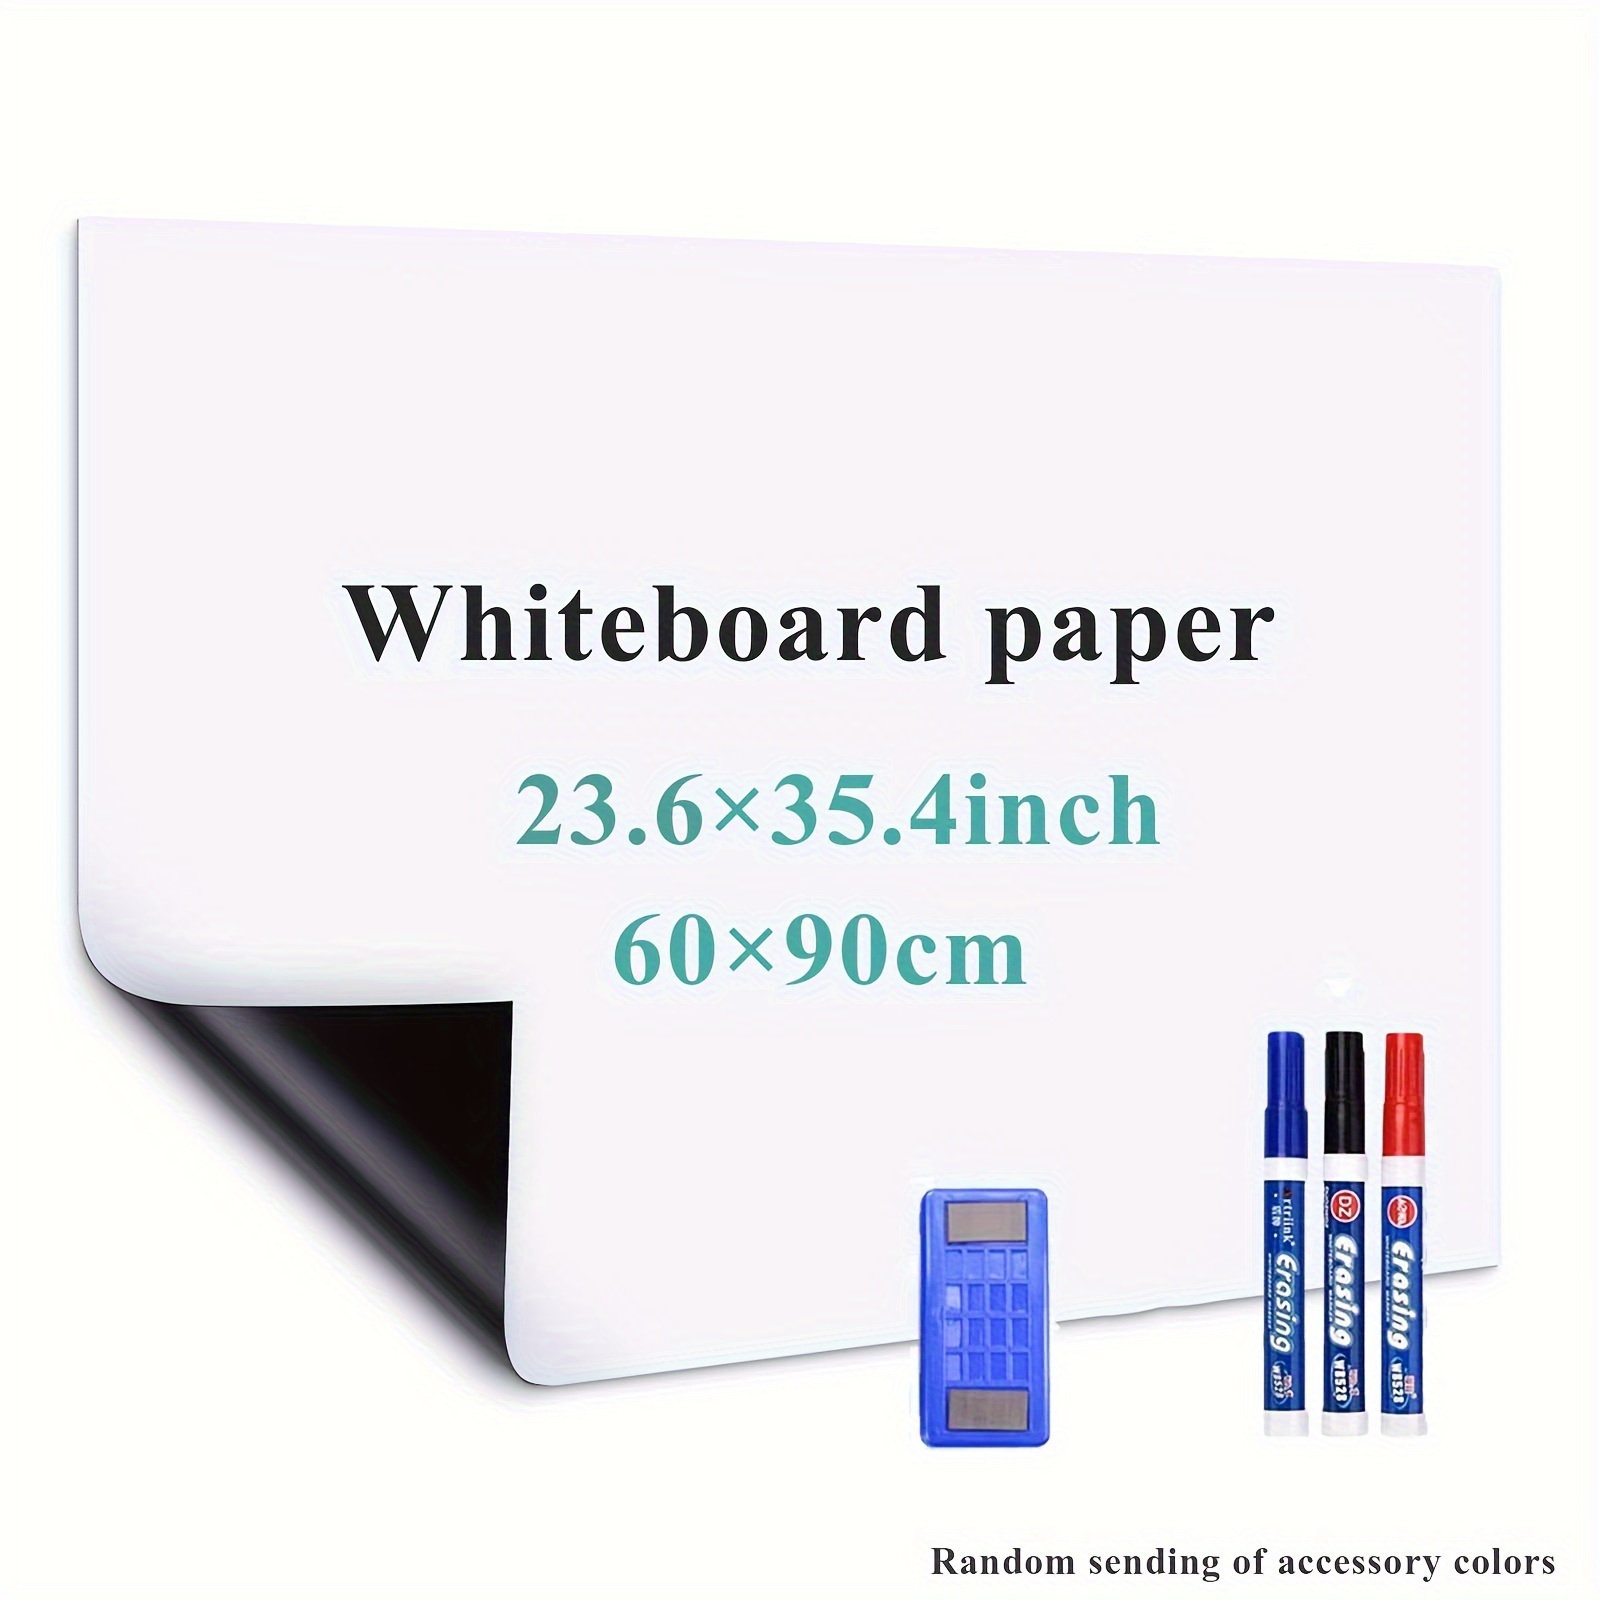 New 45*200cm Whiteboard Sheets Sticker Dry Erasable Paper Plain